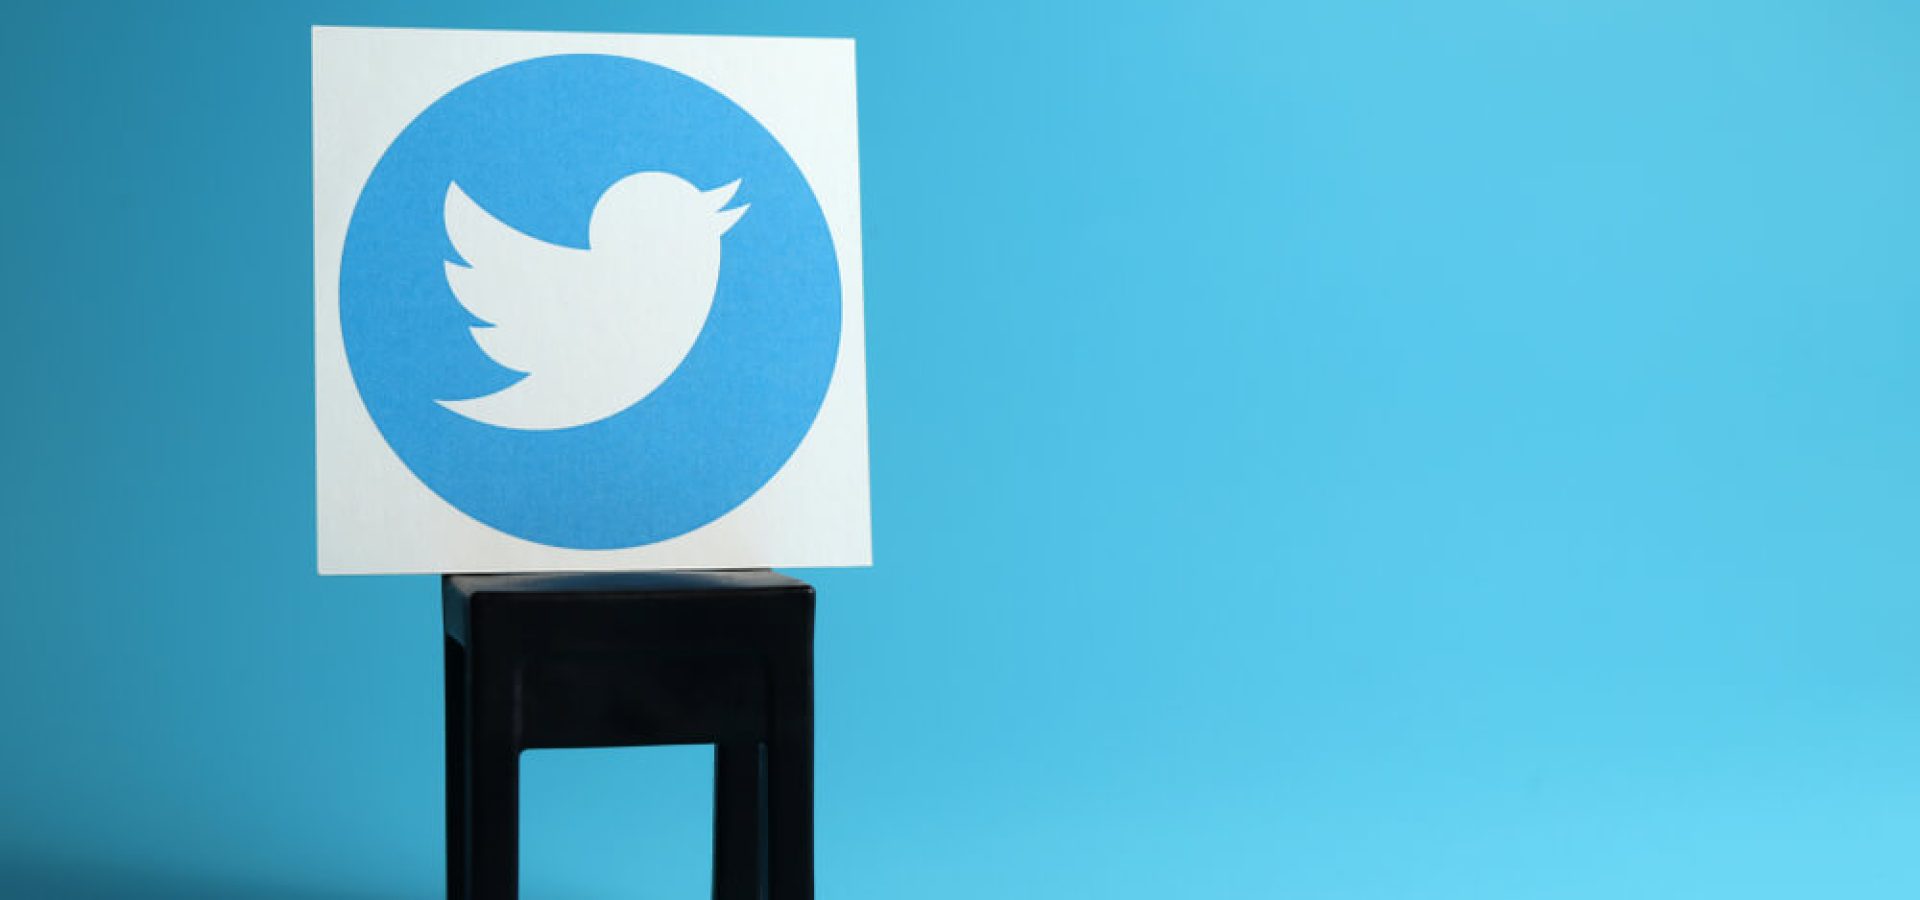 Twitter: Twitter logo on a black chair, light blue background.